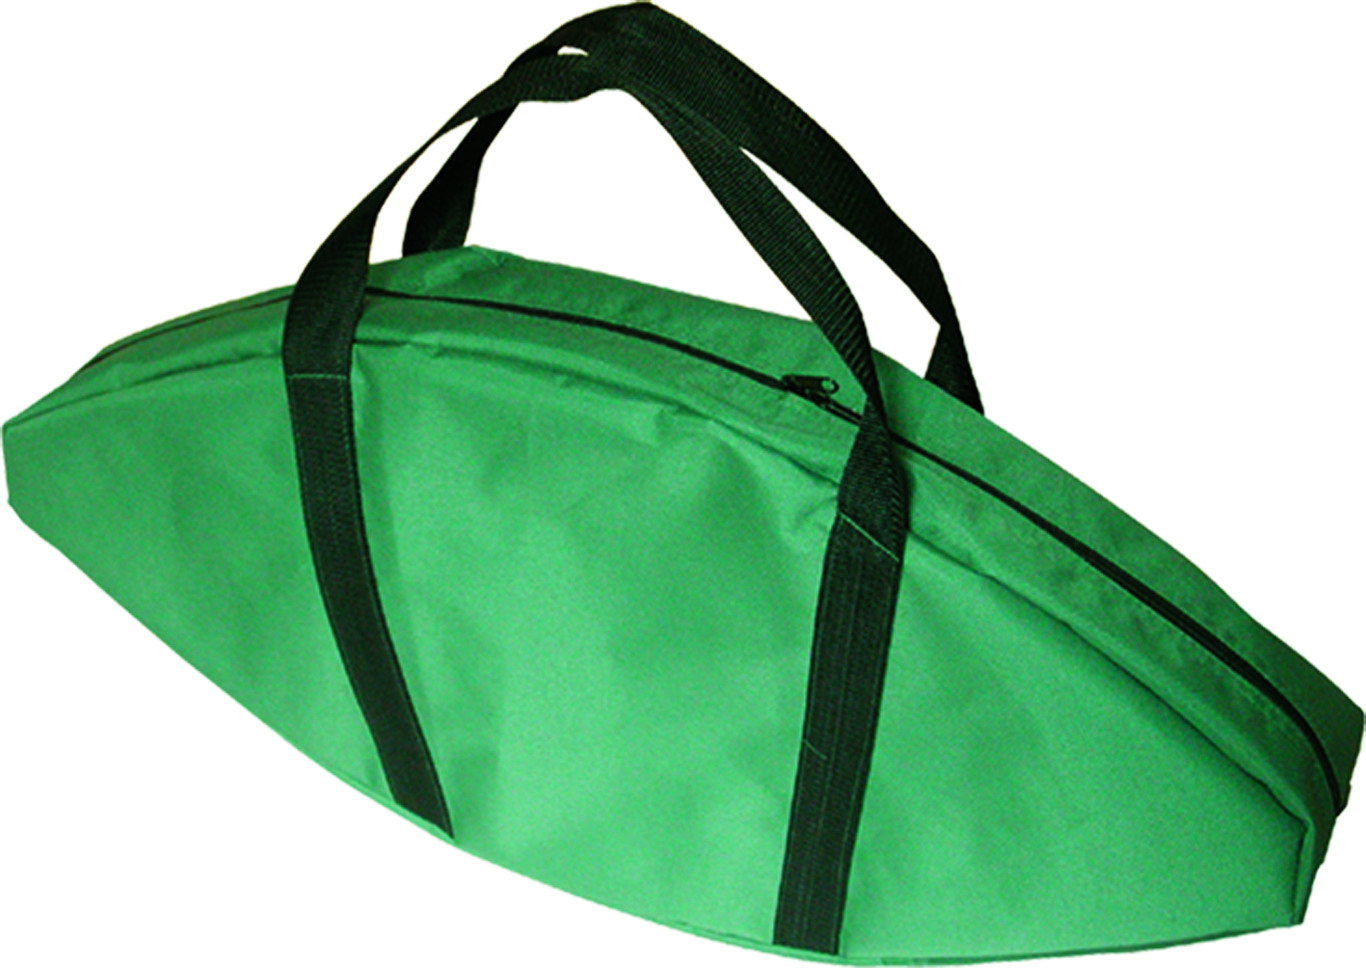 Carrying bag for trampoline GARLANDO Indoor